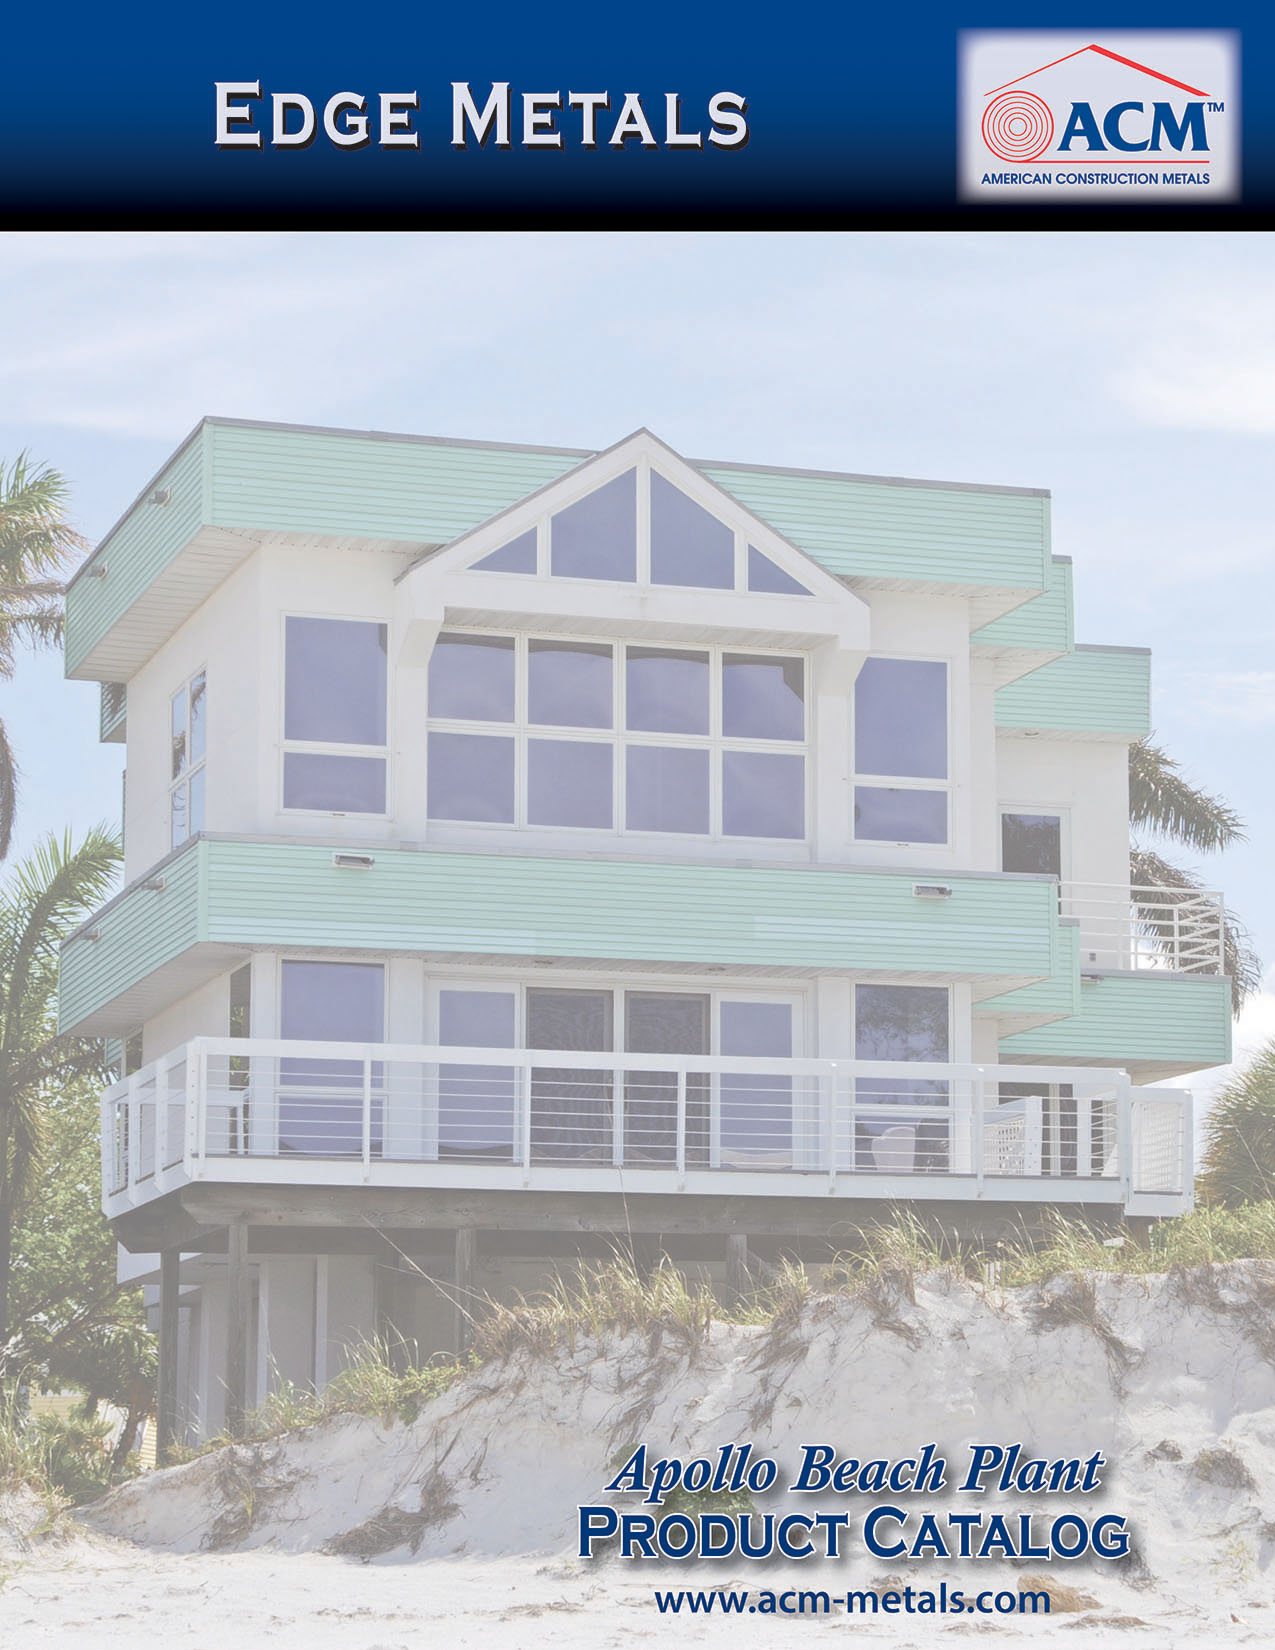 ACM Apollo Beach, Florida ACM product catalog cover